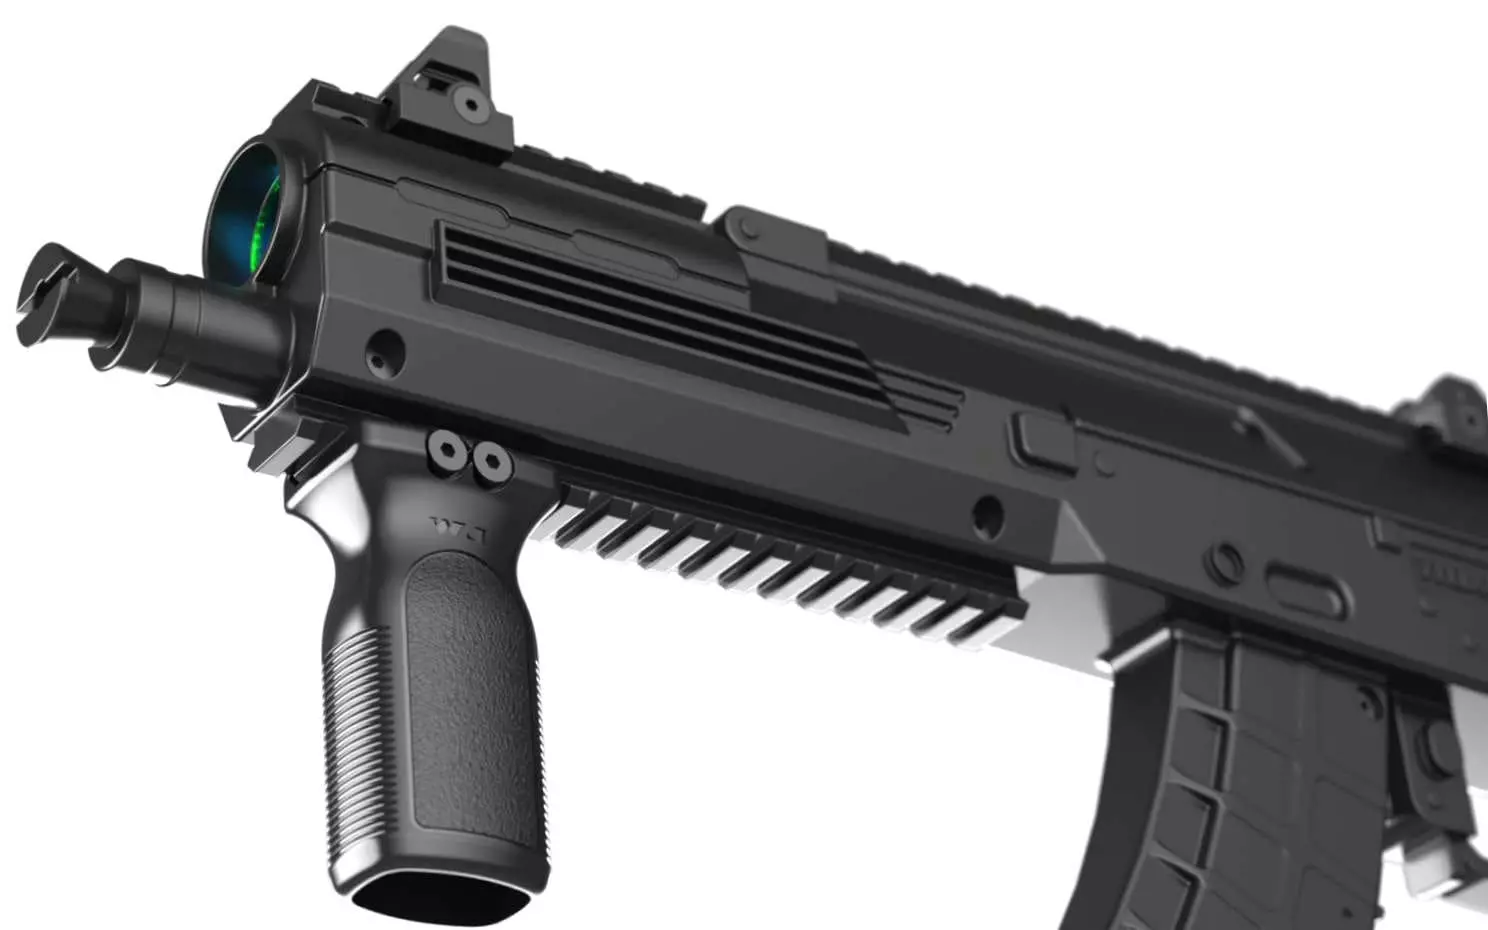 AM22 LT Picatinny rails for lasertag gun